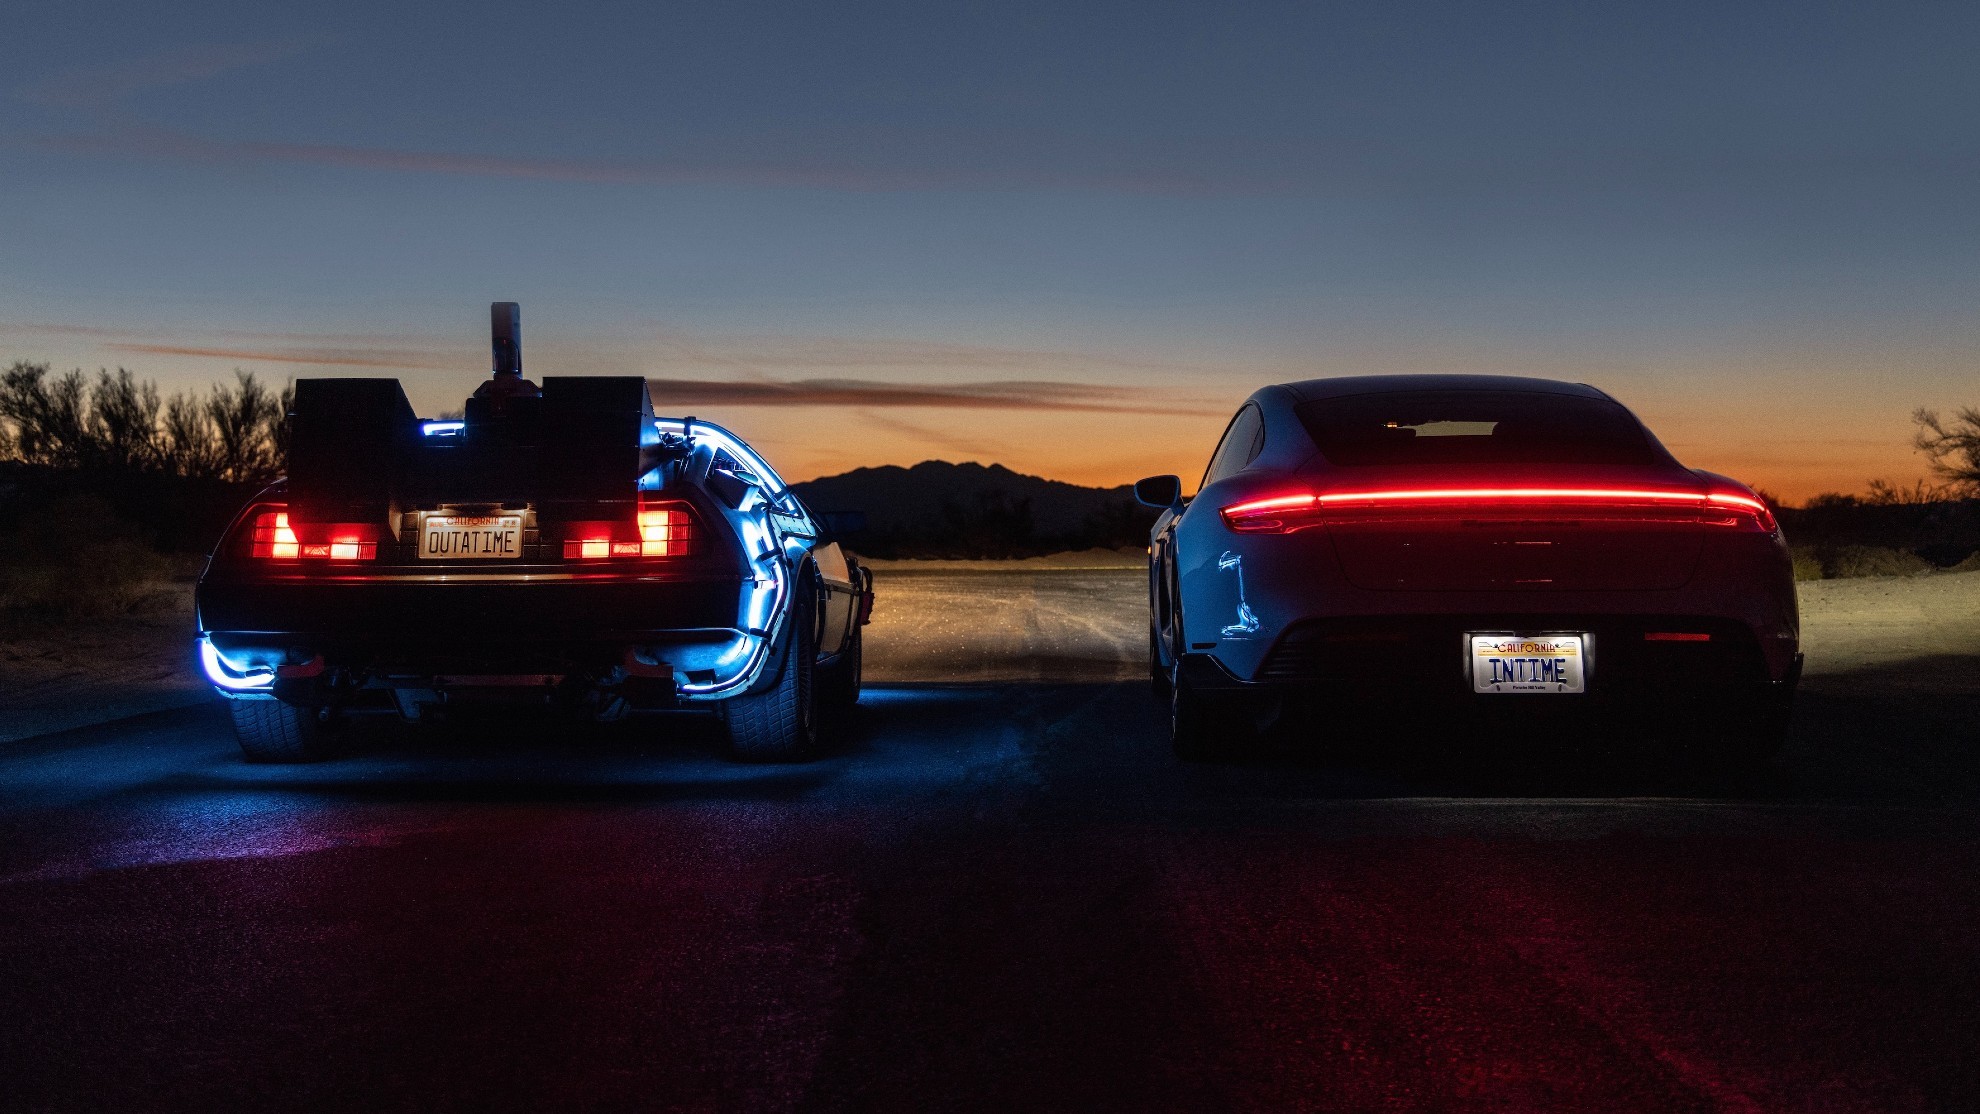 Porsche Taycan - DeLorean - Regreso al futuro - Ionity - Electrify America - 1,21 gigavatios